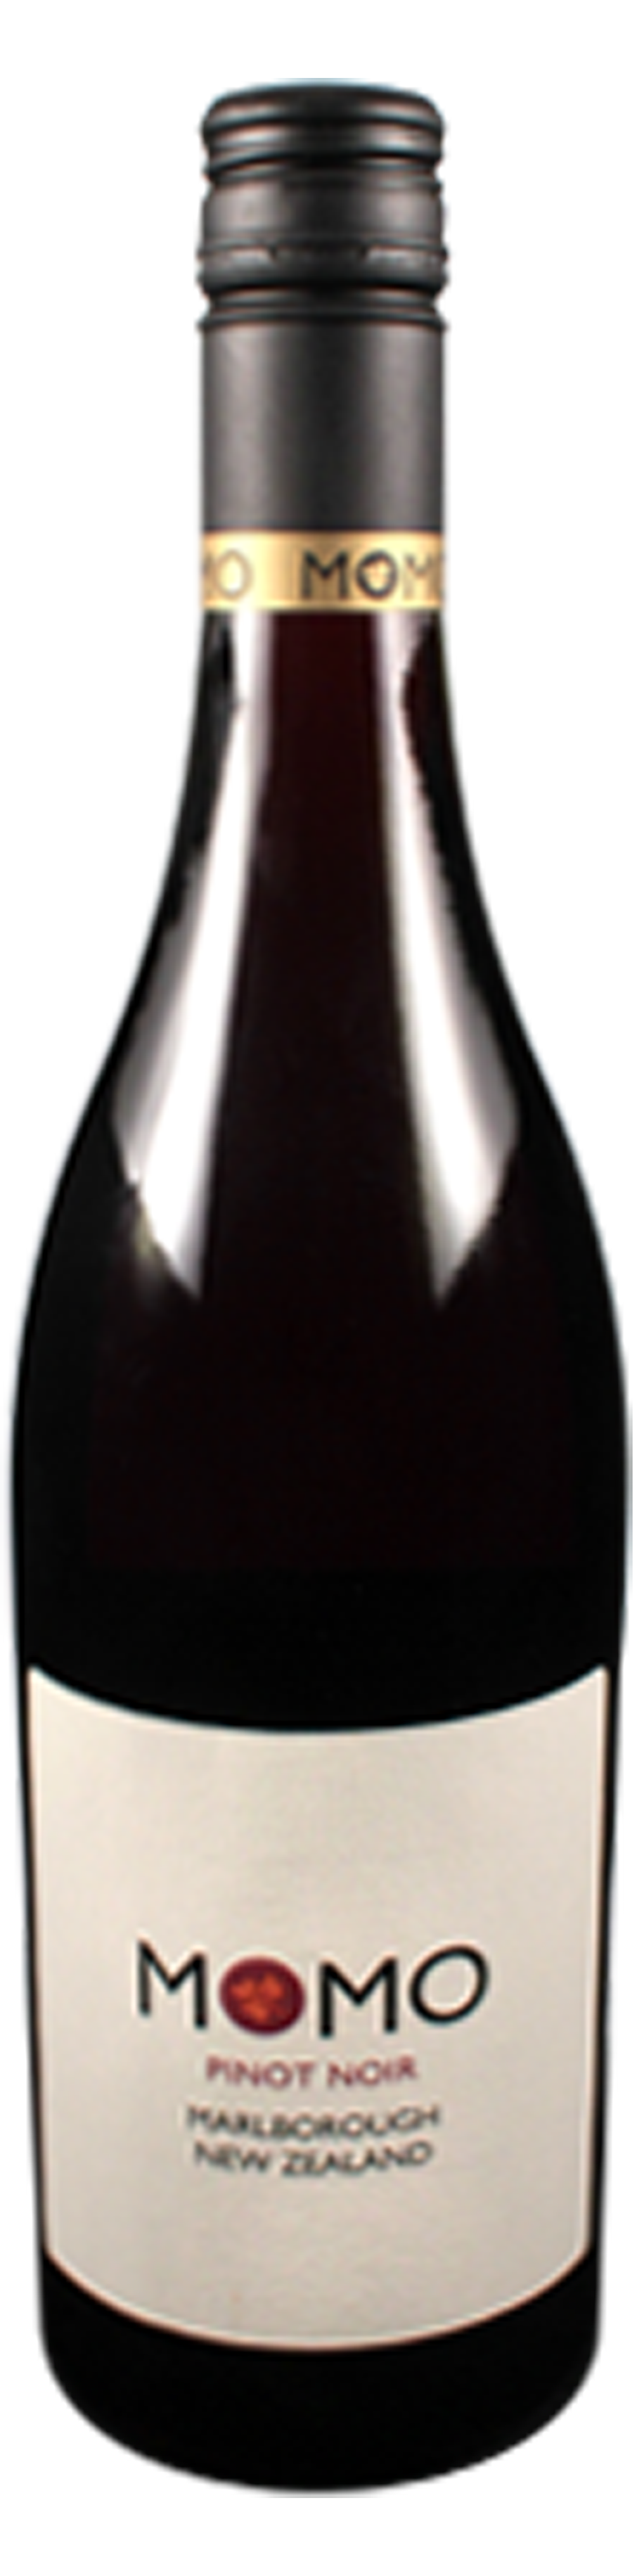 Bottle shot of 2008 Pinot Noir